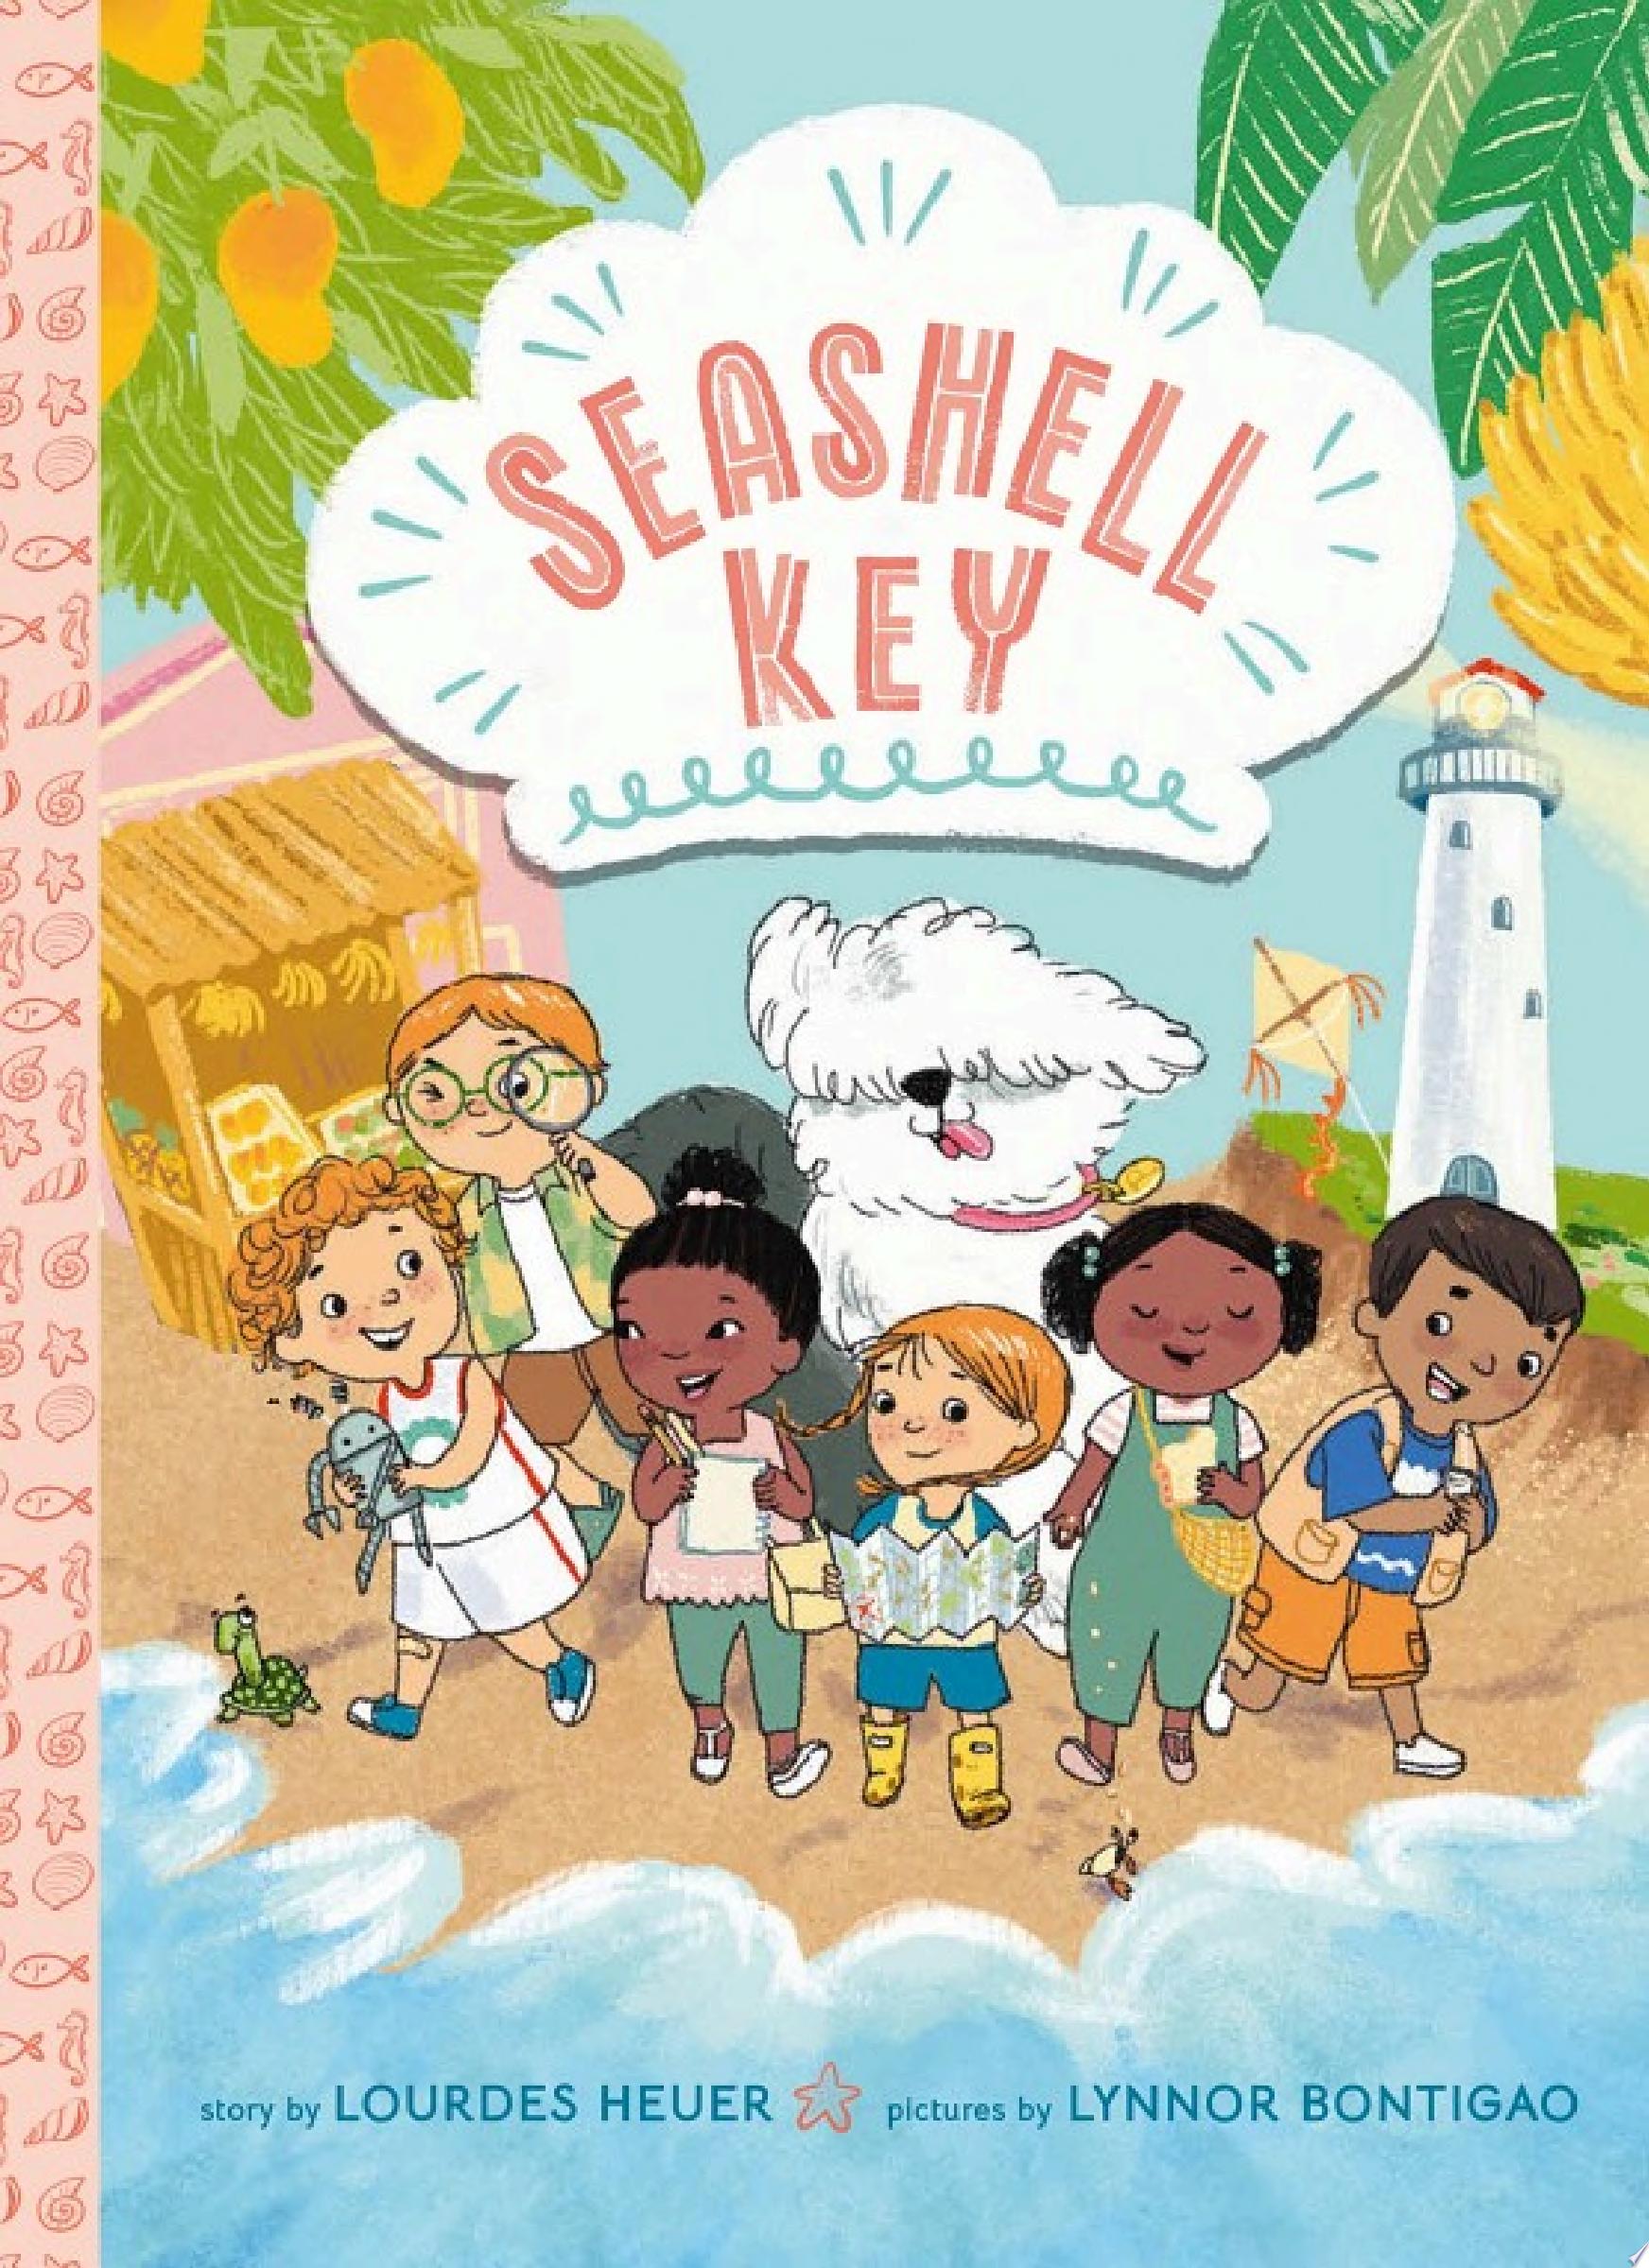 Image for "Seashell Key (Seashell Key #1)"